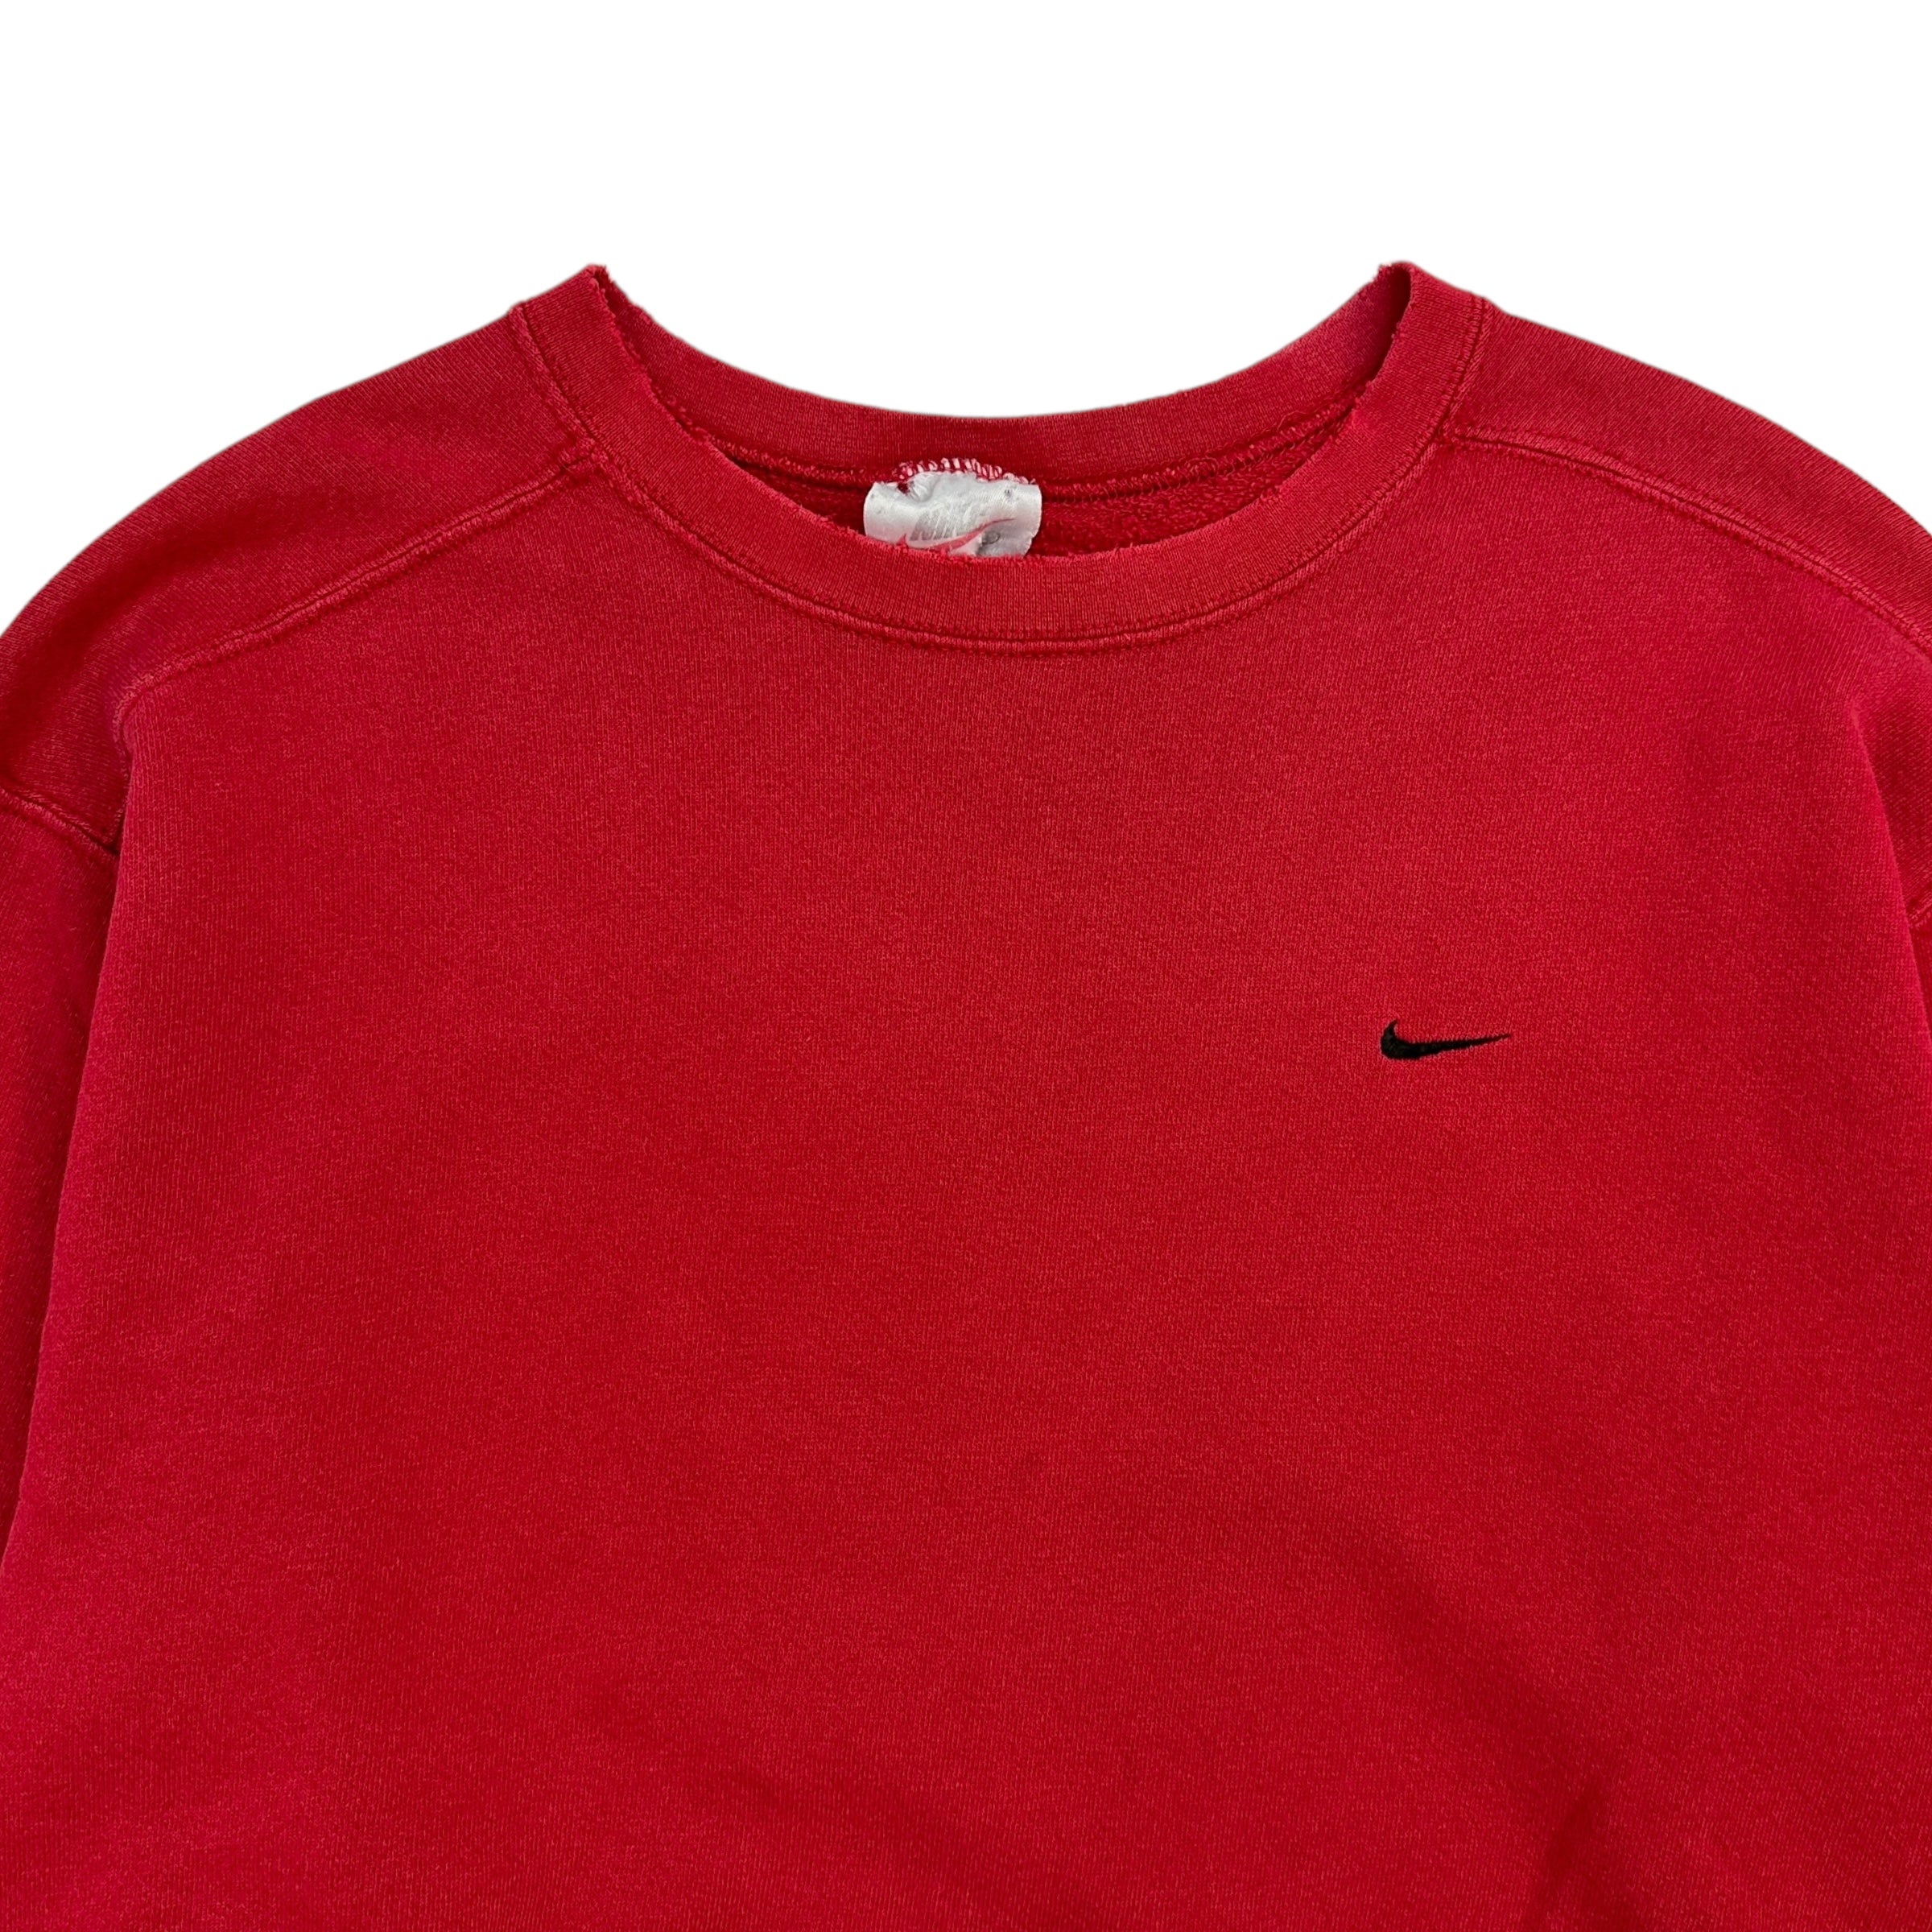 Vintage Nike Small Swoosh Crewneck Red